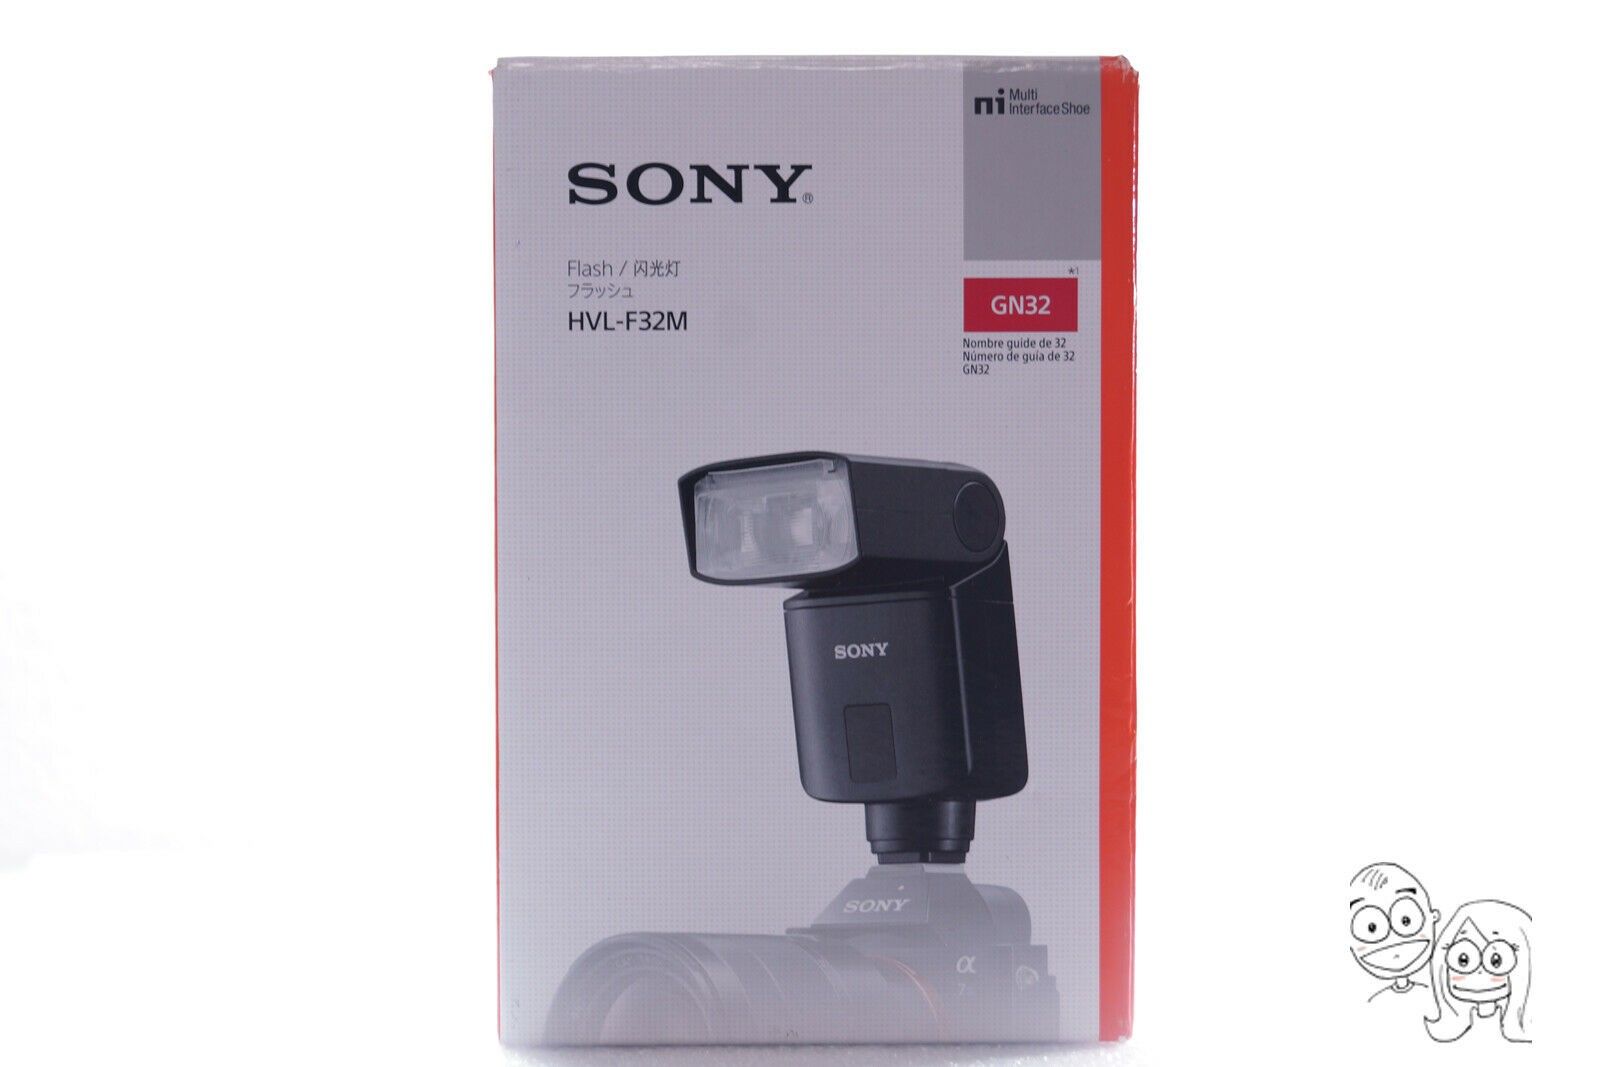 Sony HVL-F32M MI (Multi-interface shoe) Camera Flash NEW